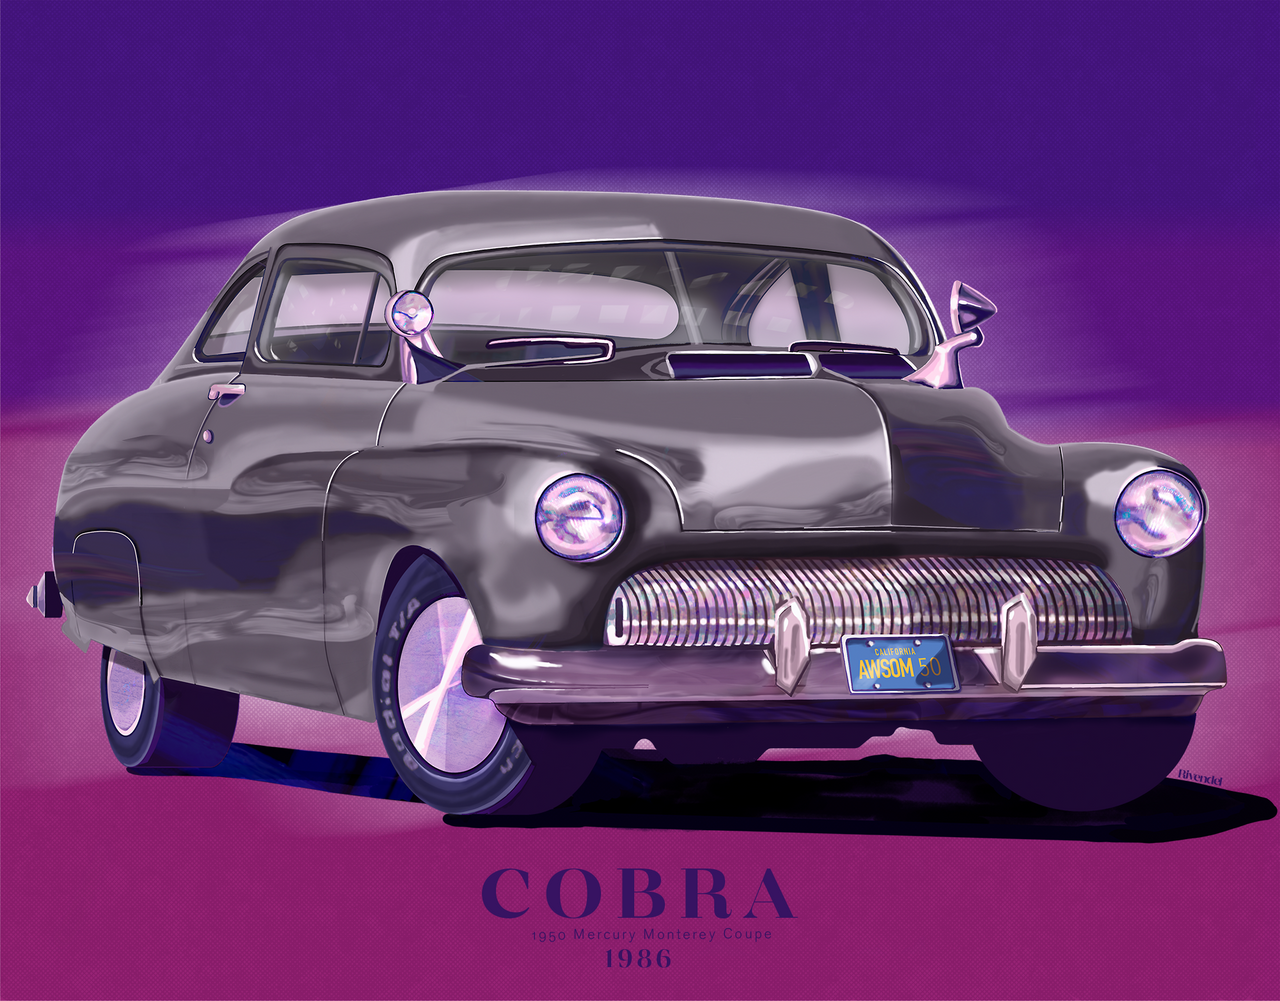 Cobra 1986 / Mercury Monterey Coupe by rivendel-on on DeviantArt